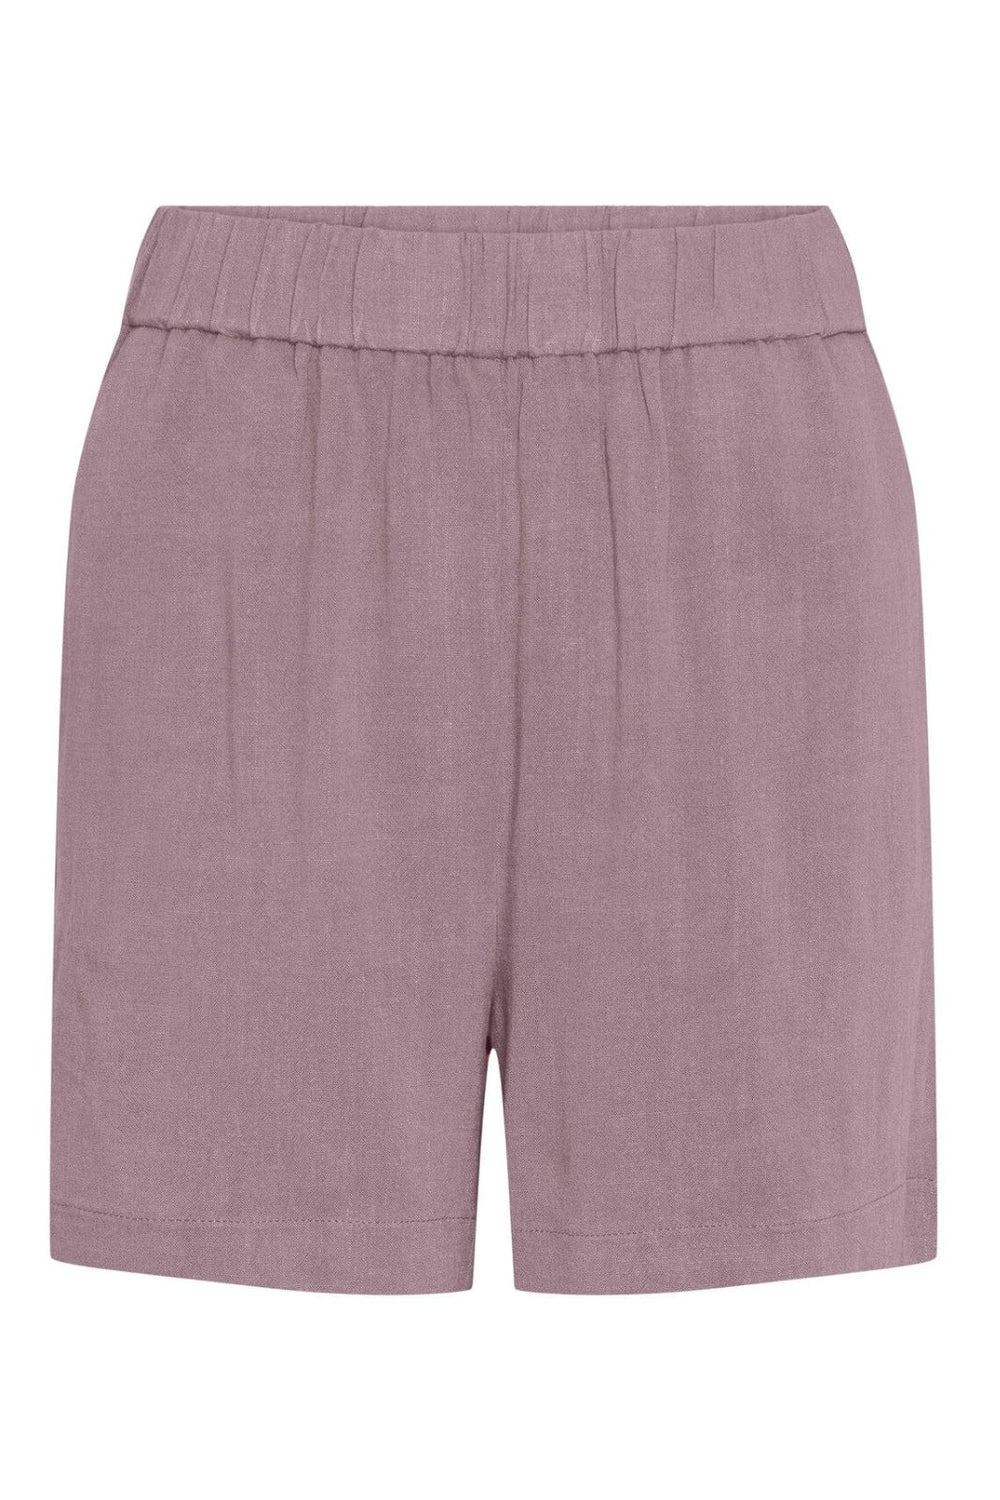 Pieces - Pcvinsty Linen Shorts - 4474944 Woodrose Shorts 